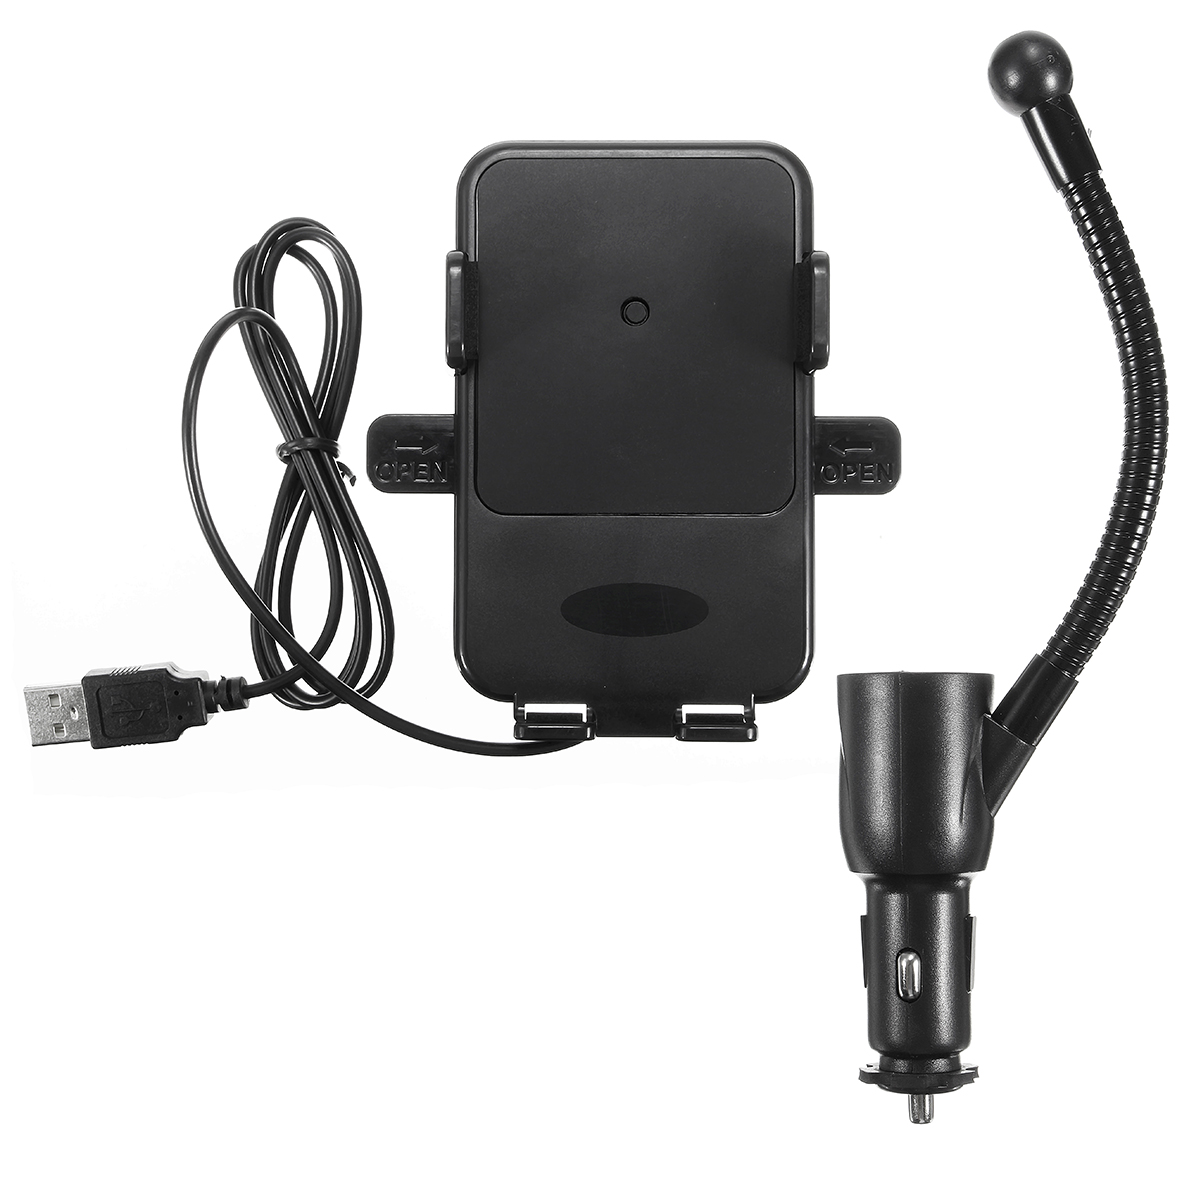 Qi Wireless Charger Dual USB Auto Cig Arette Feuerzeughalter für I Phone Sam Sungder